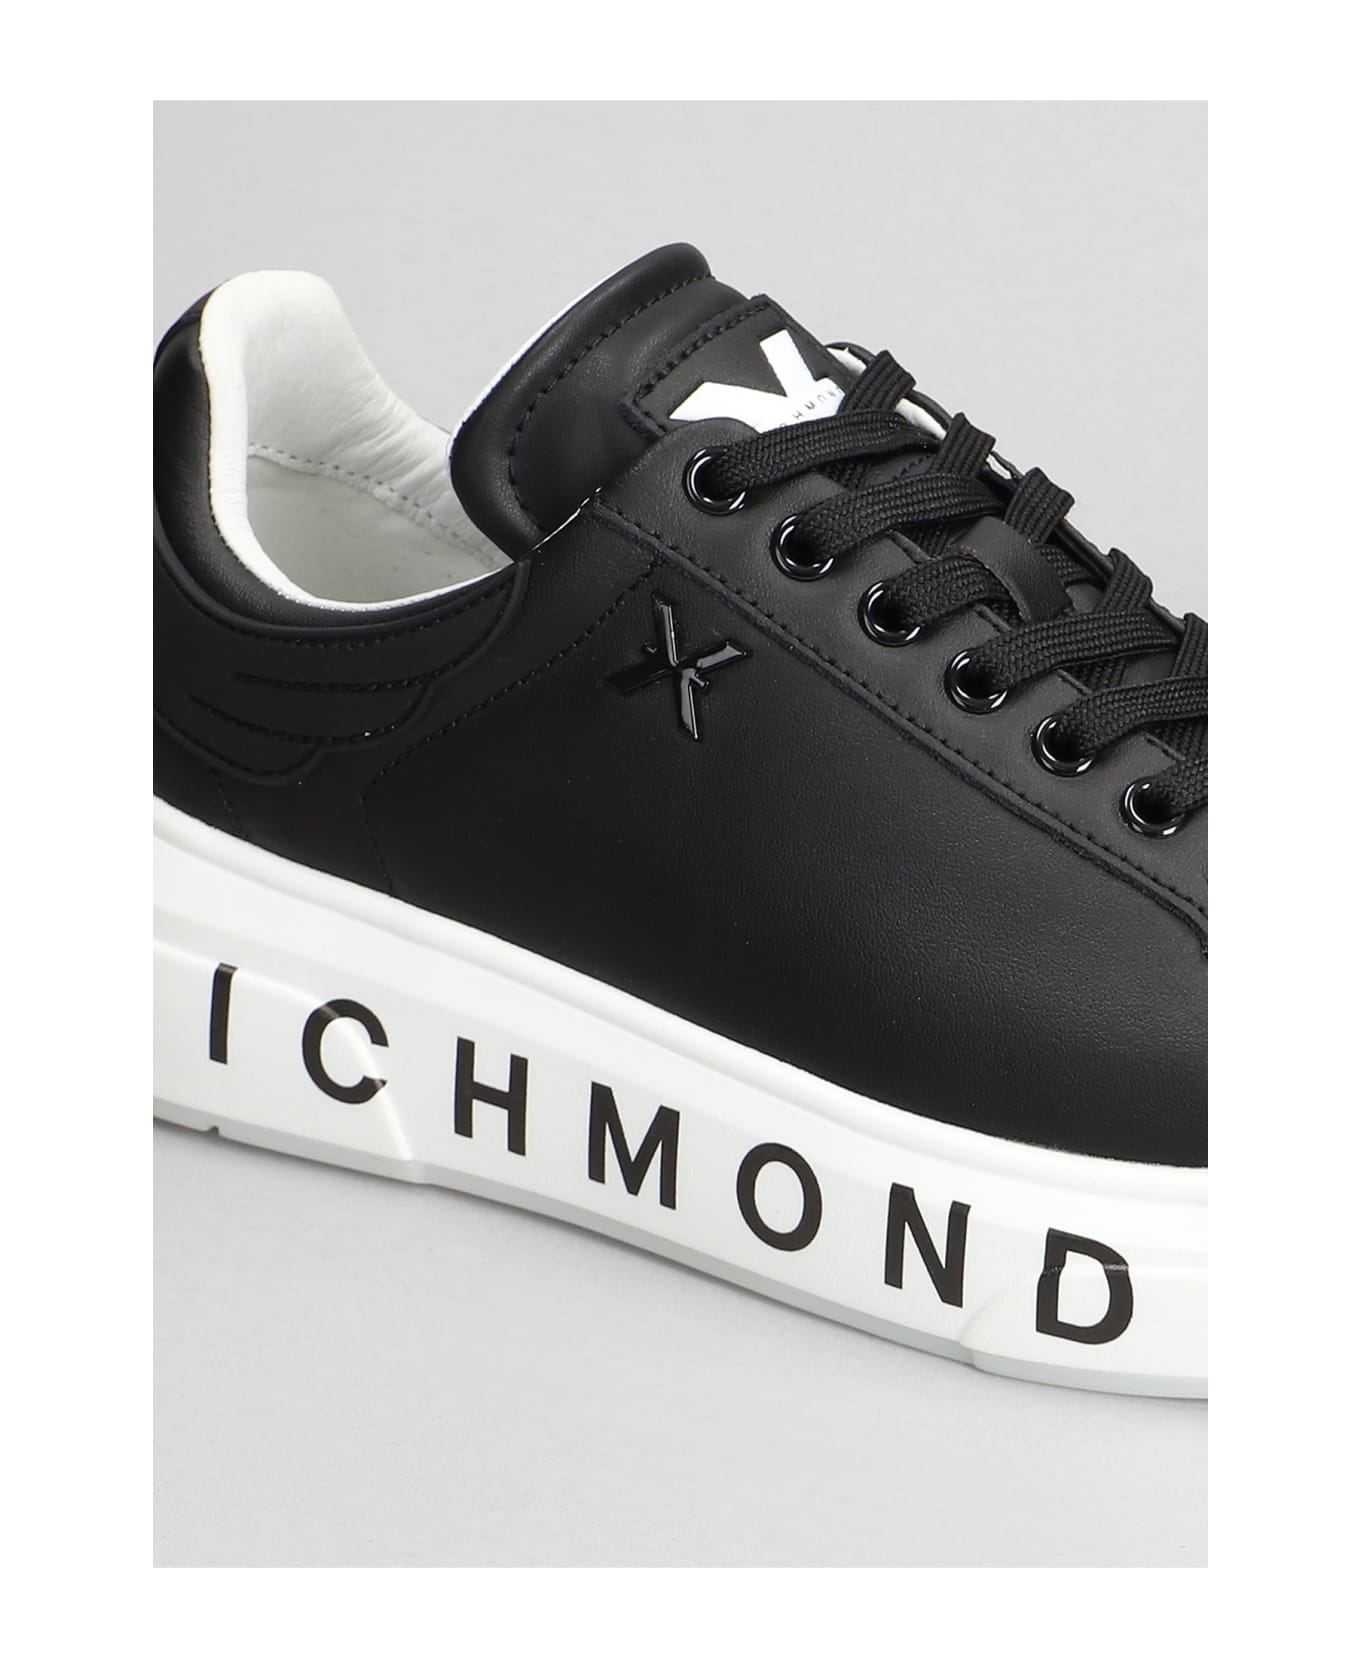 John Richmond Sneakers In Black Leather - black